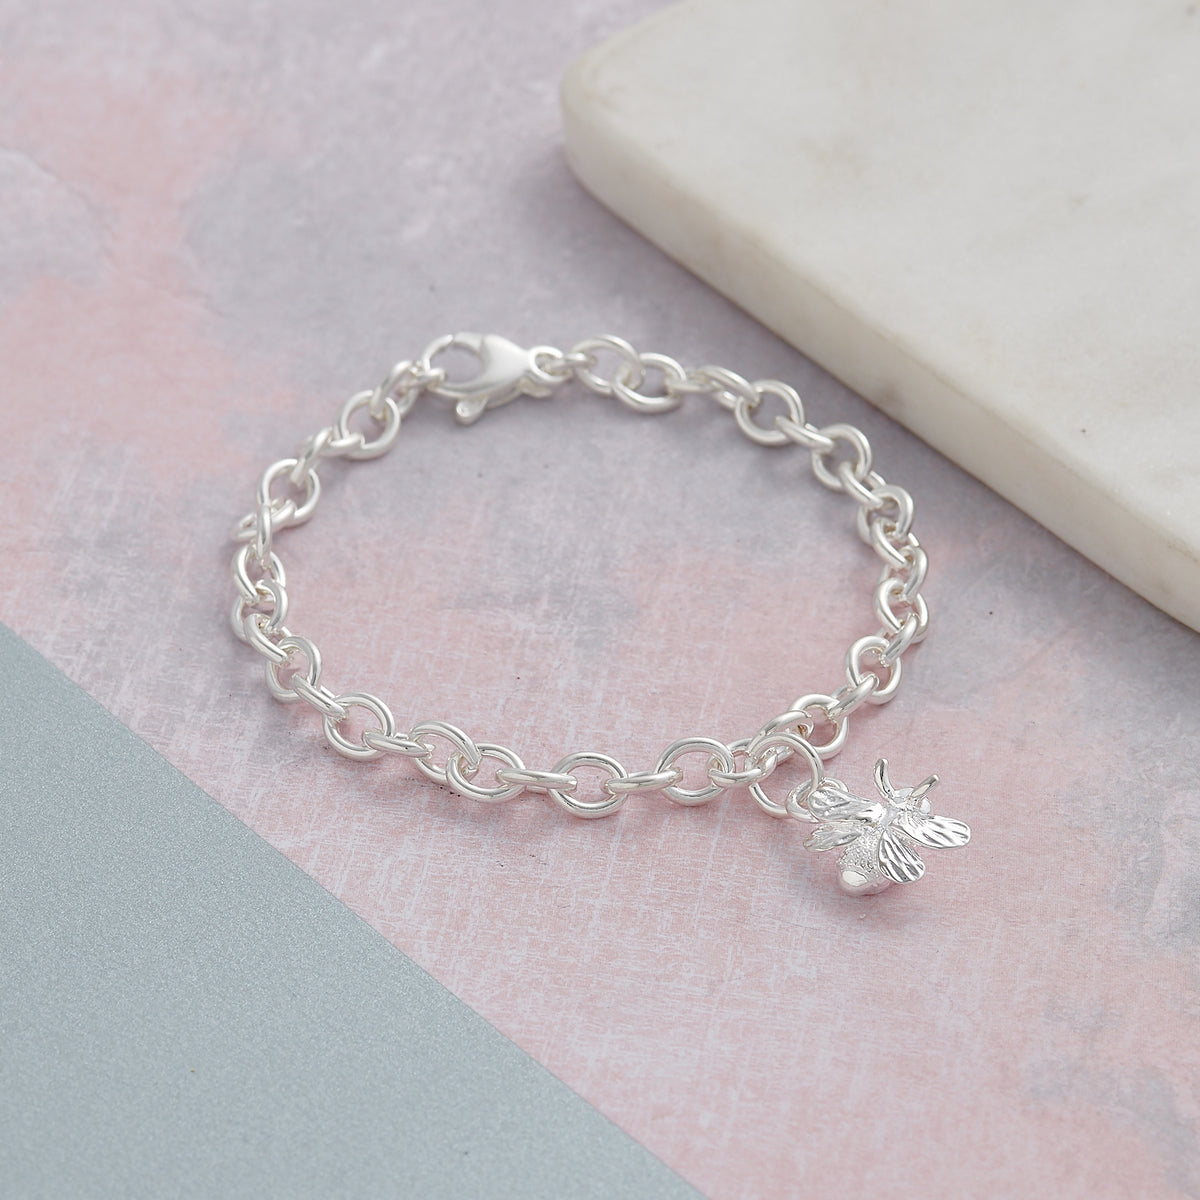 Solid sterling silver bumble bee charm bracelet designer Scarlett Jewellery